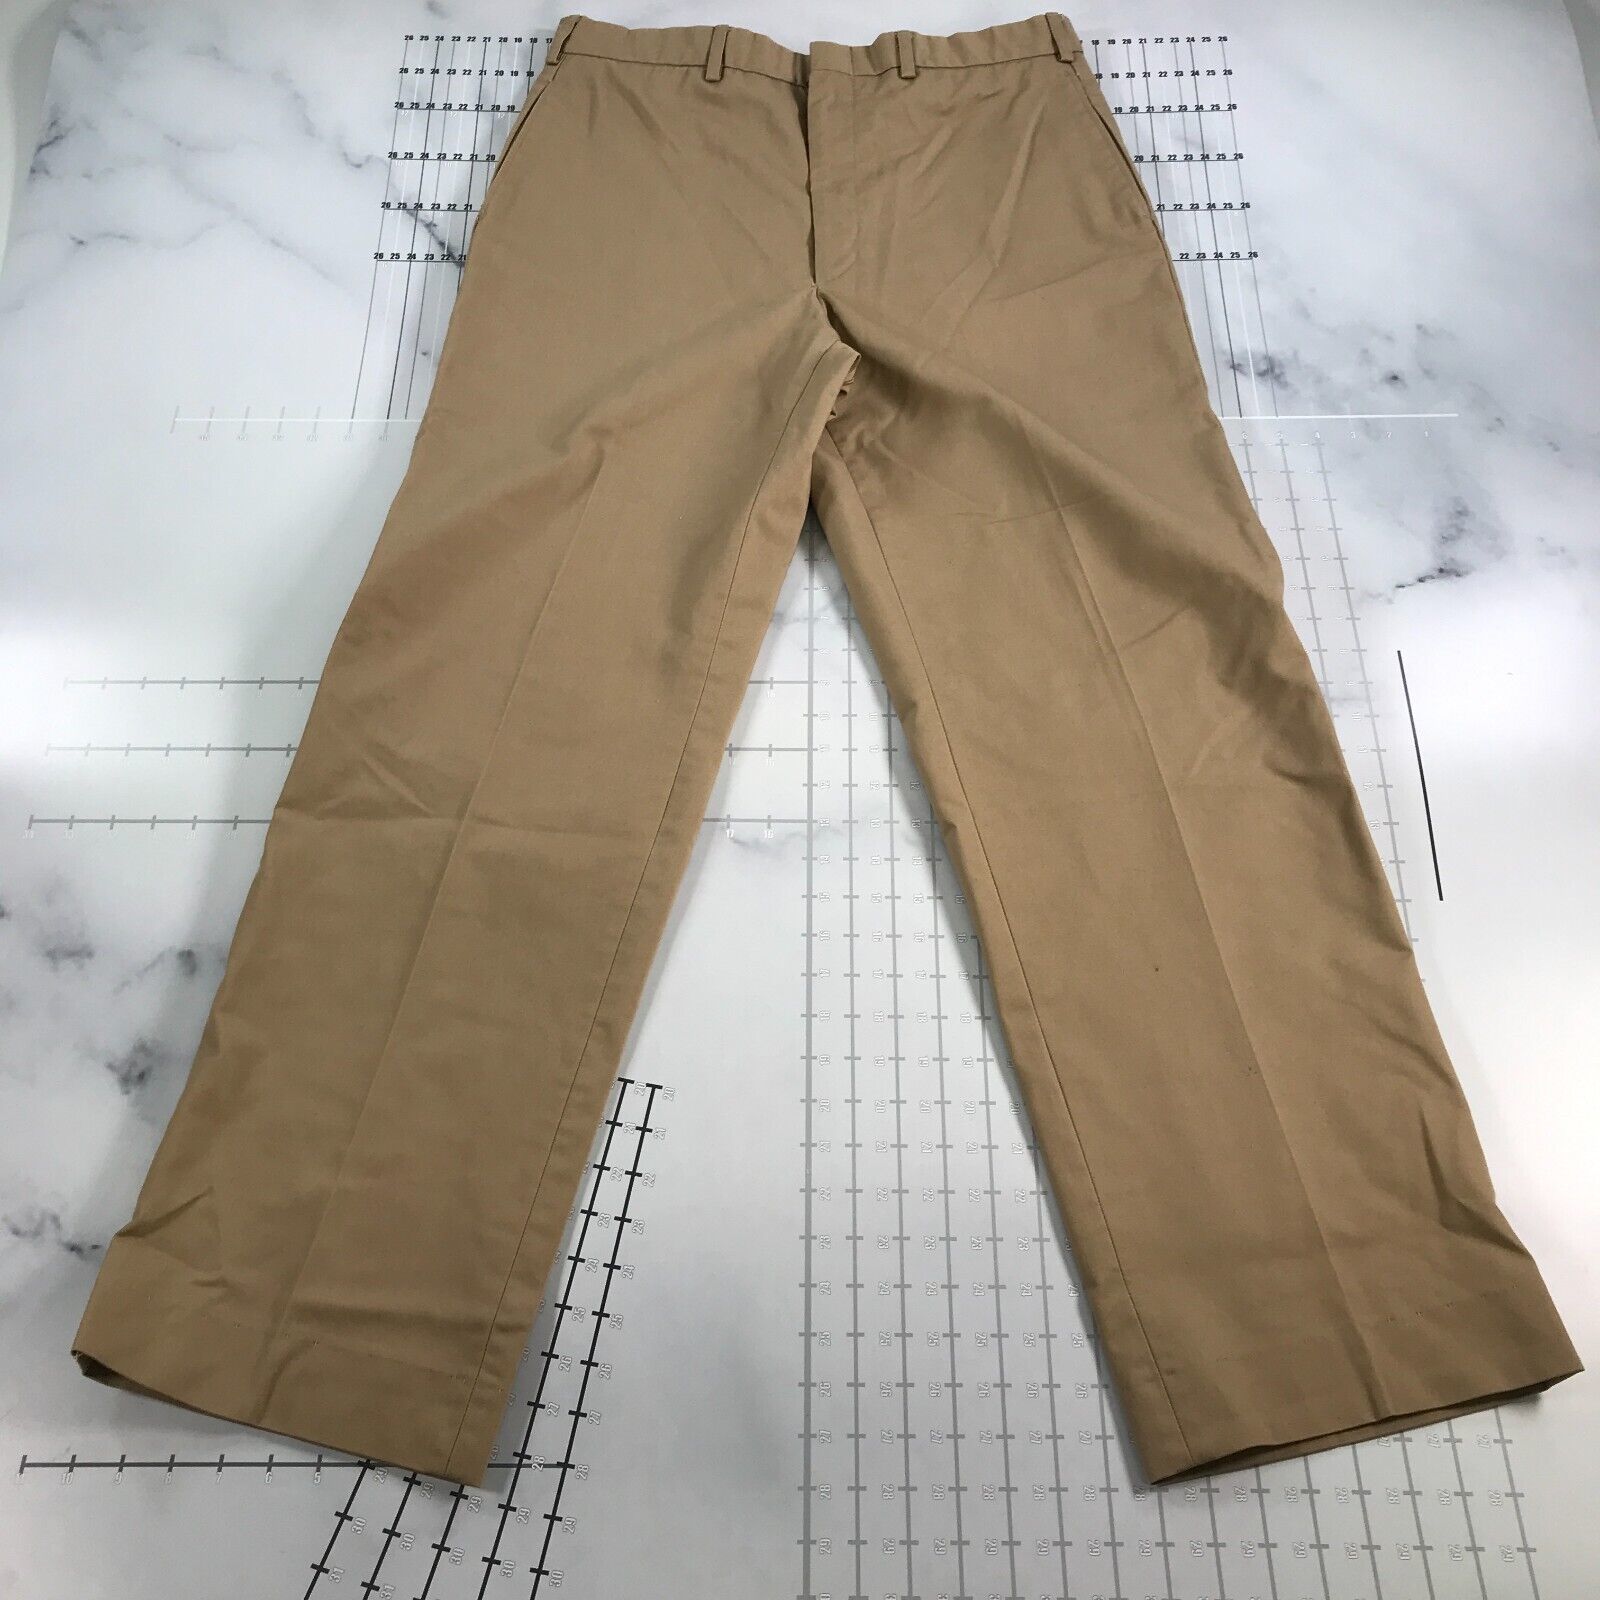 Primary image for Vintage Creighton Navy Pants Mens 35 R Brown Khaki Official Uniform Dacron Blend